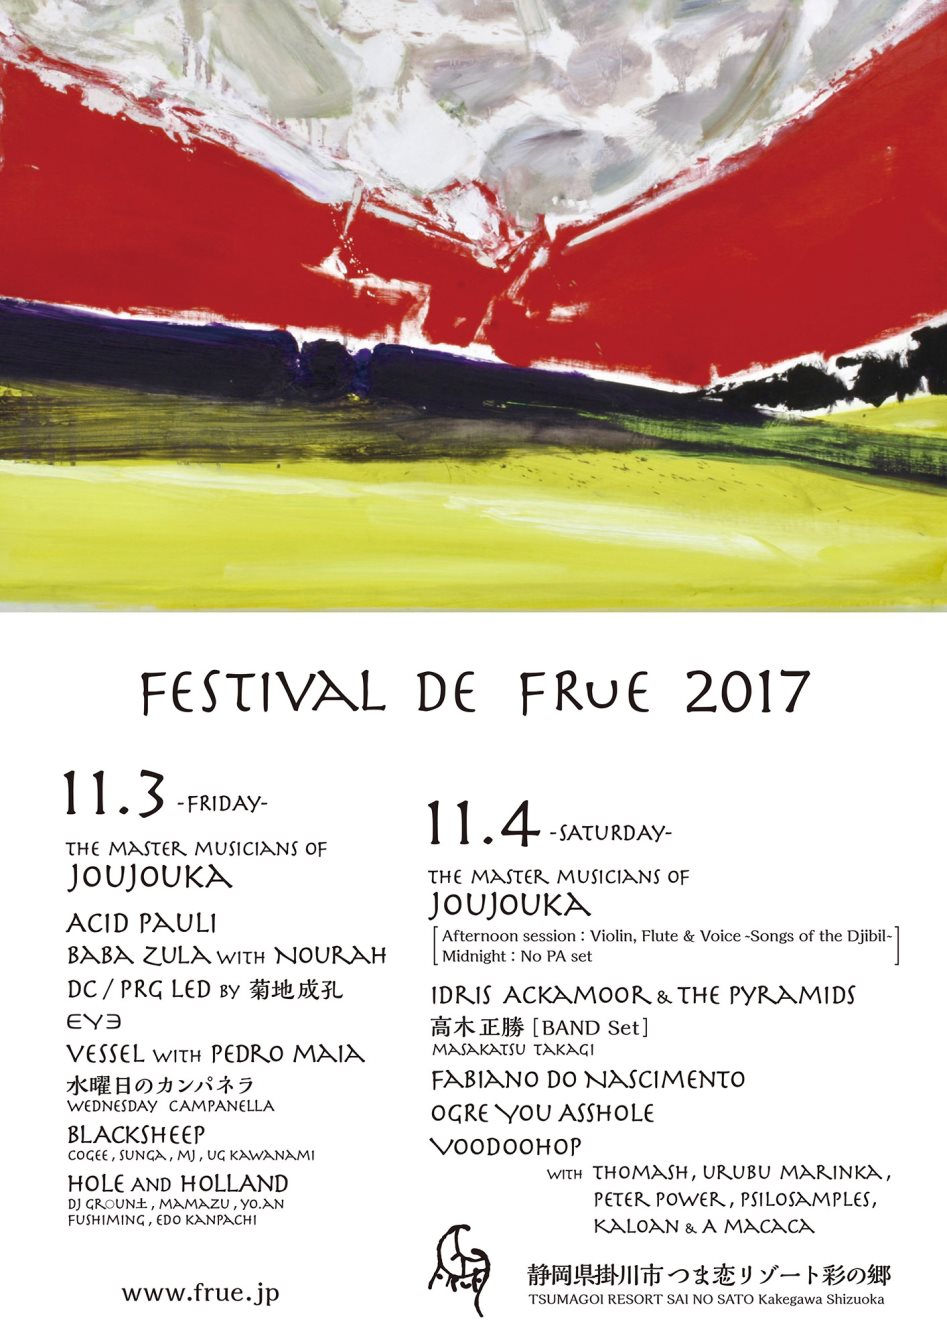 Festival de Frue - Flyer front